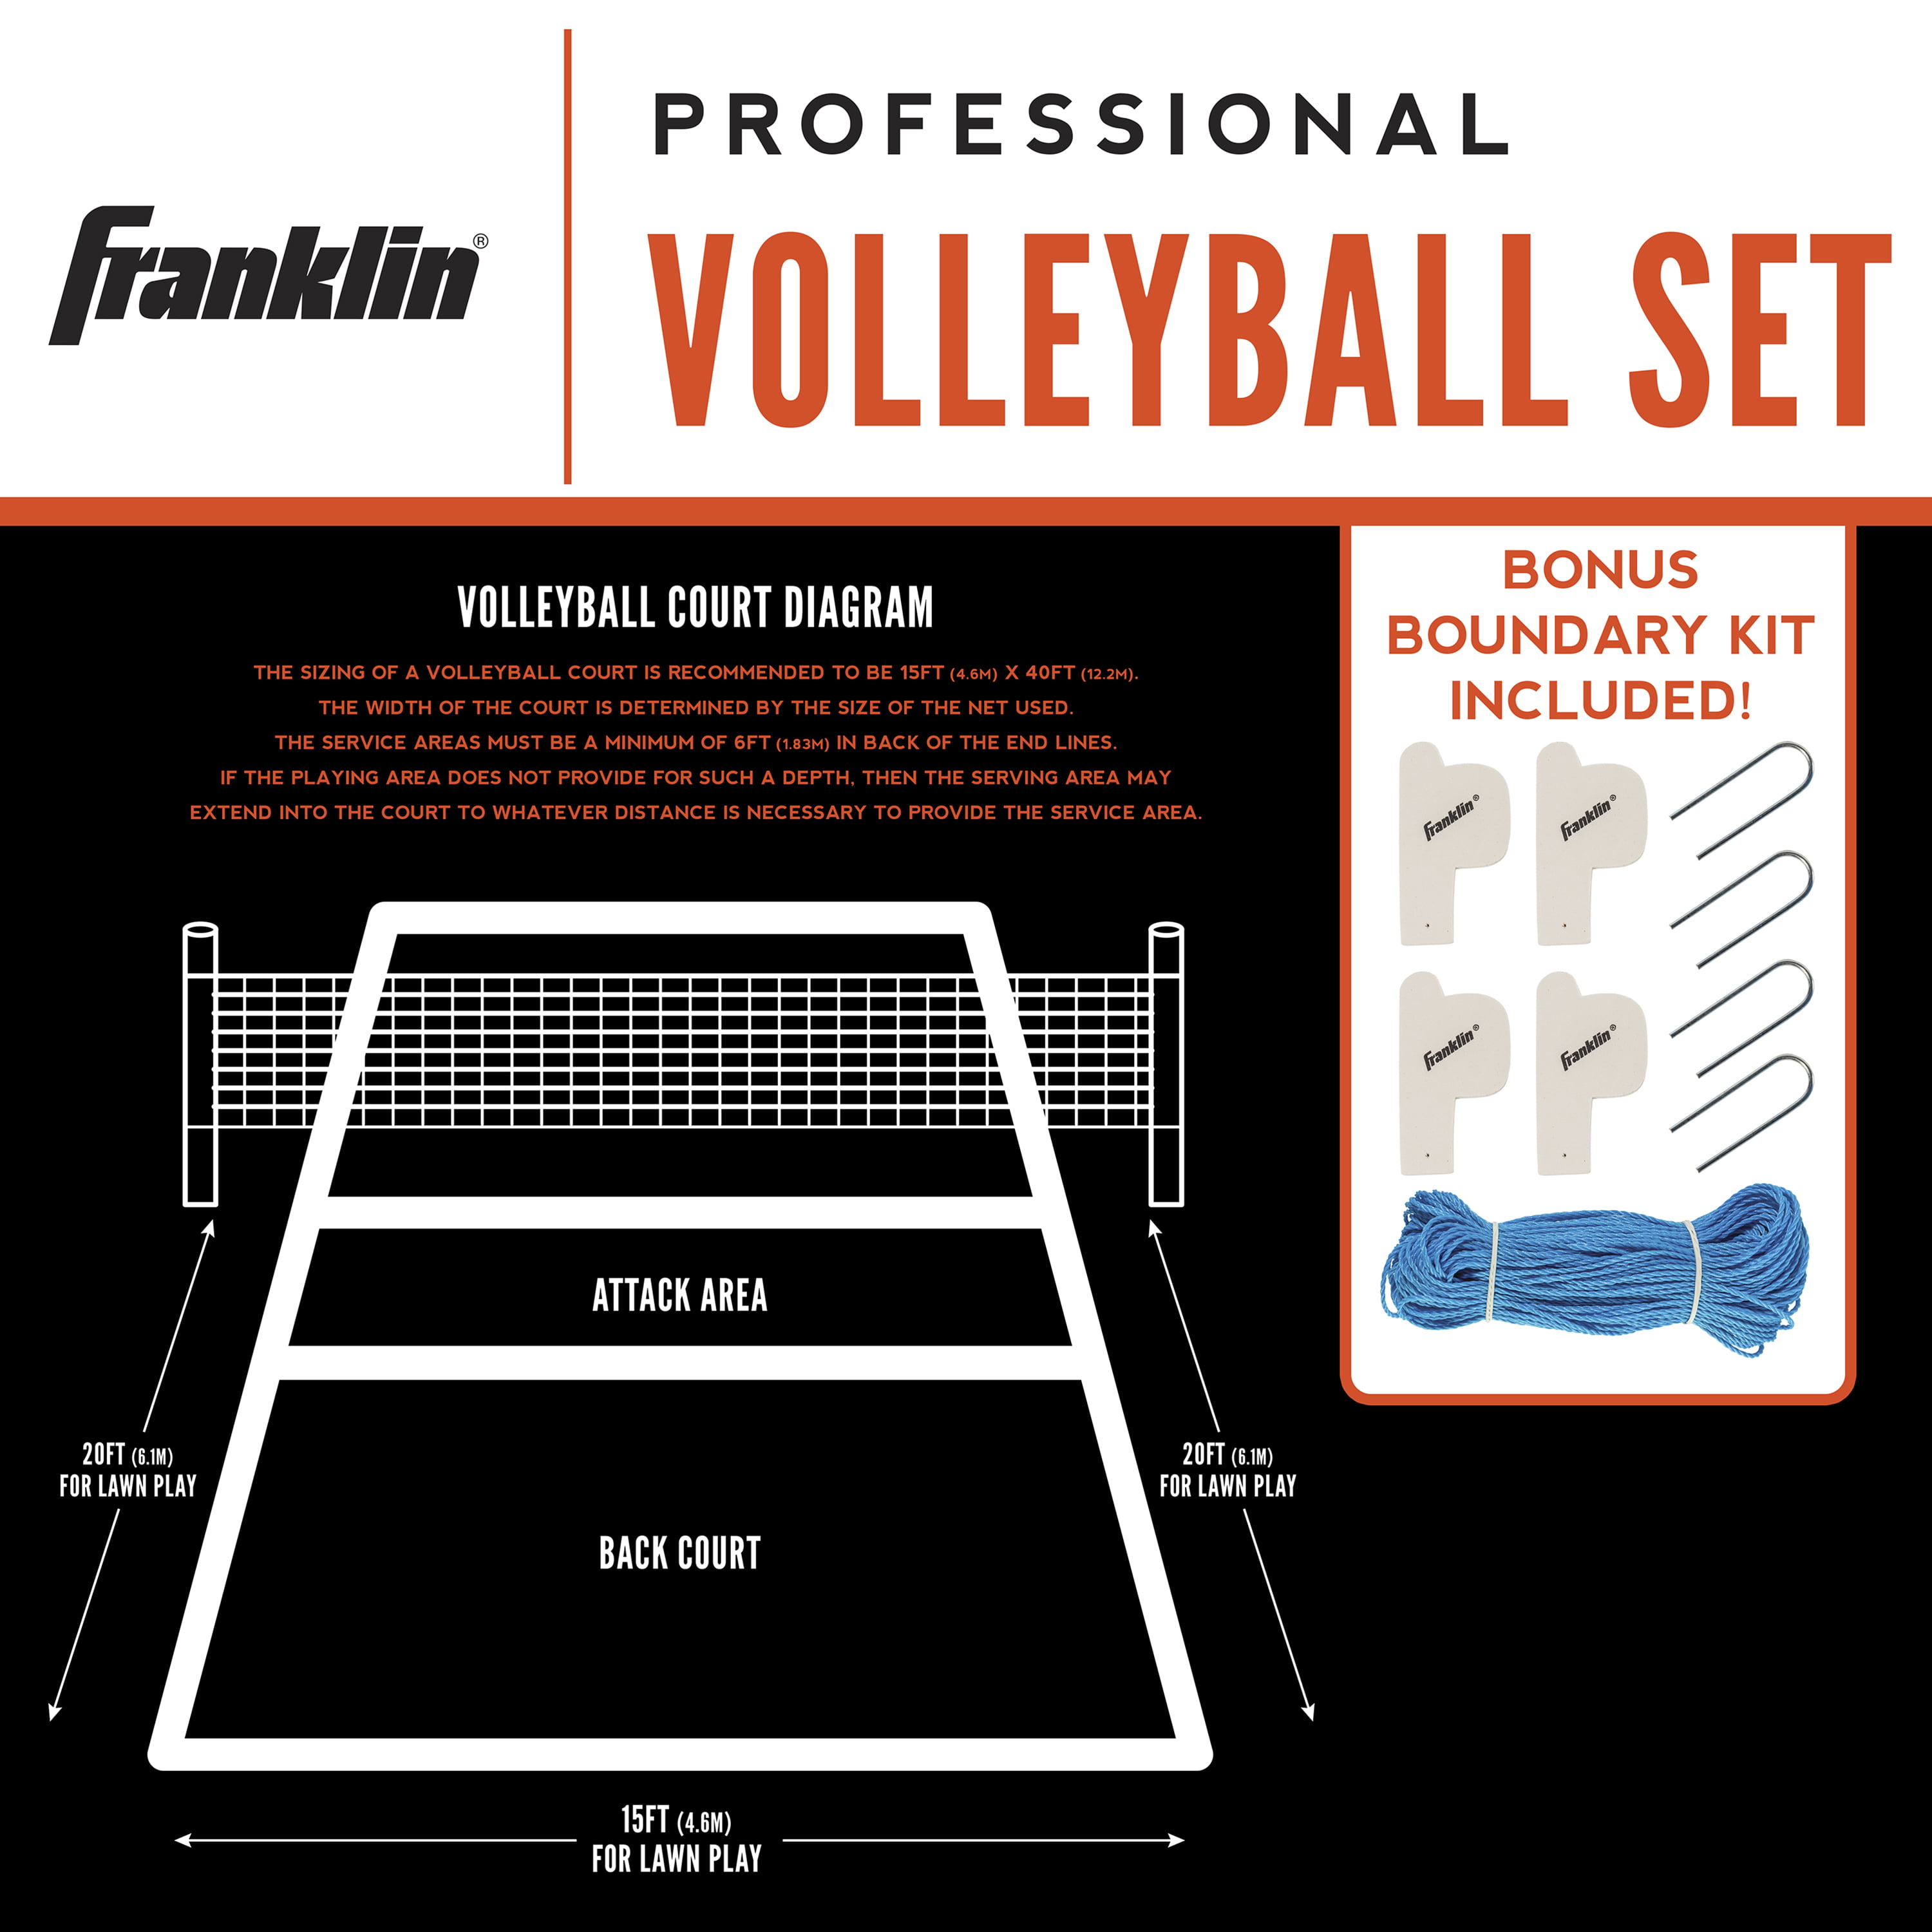 Franklin Volleyball System Professional Series Stahlpfosten Garten - Strand 